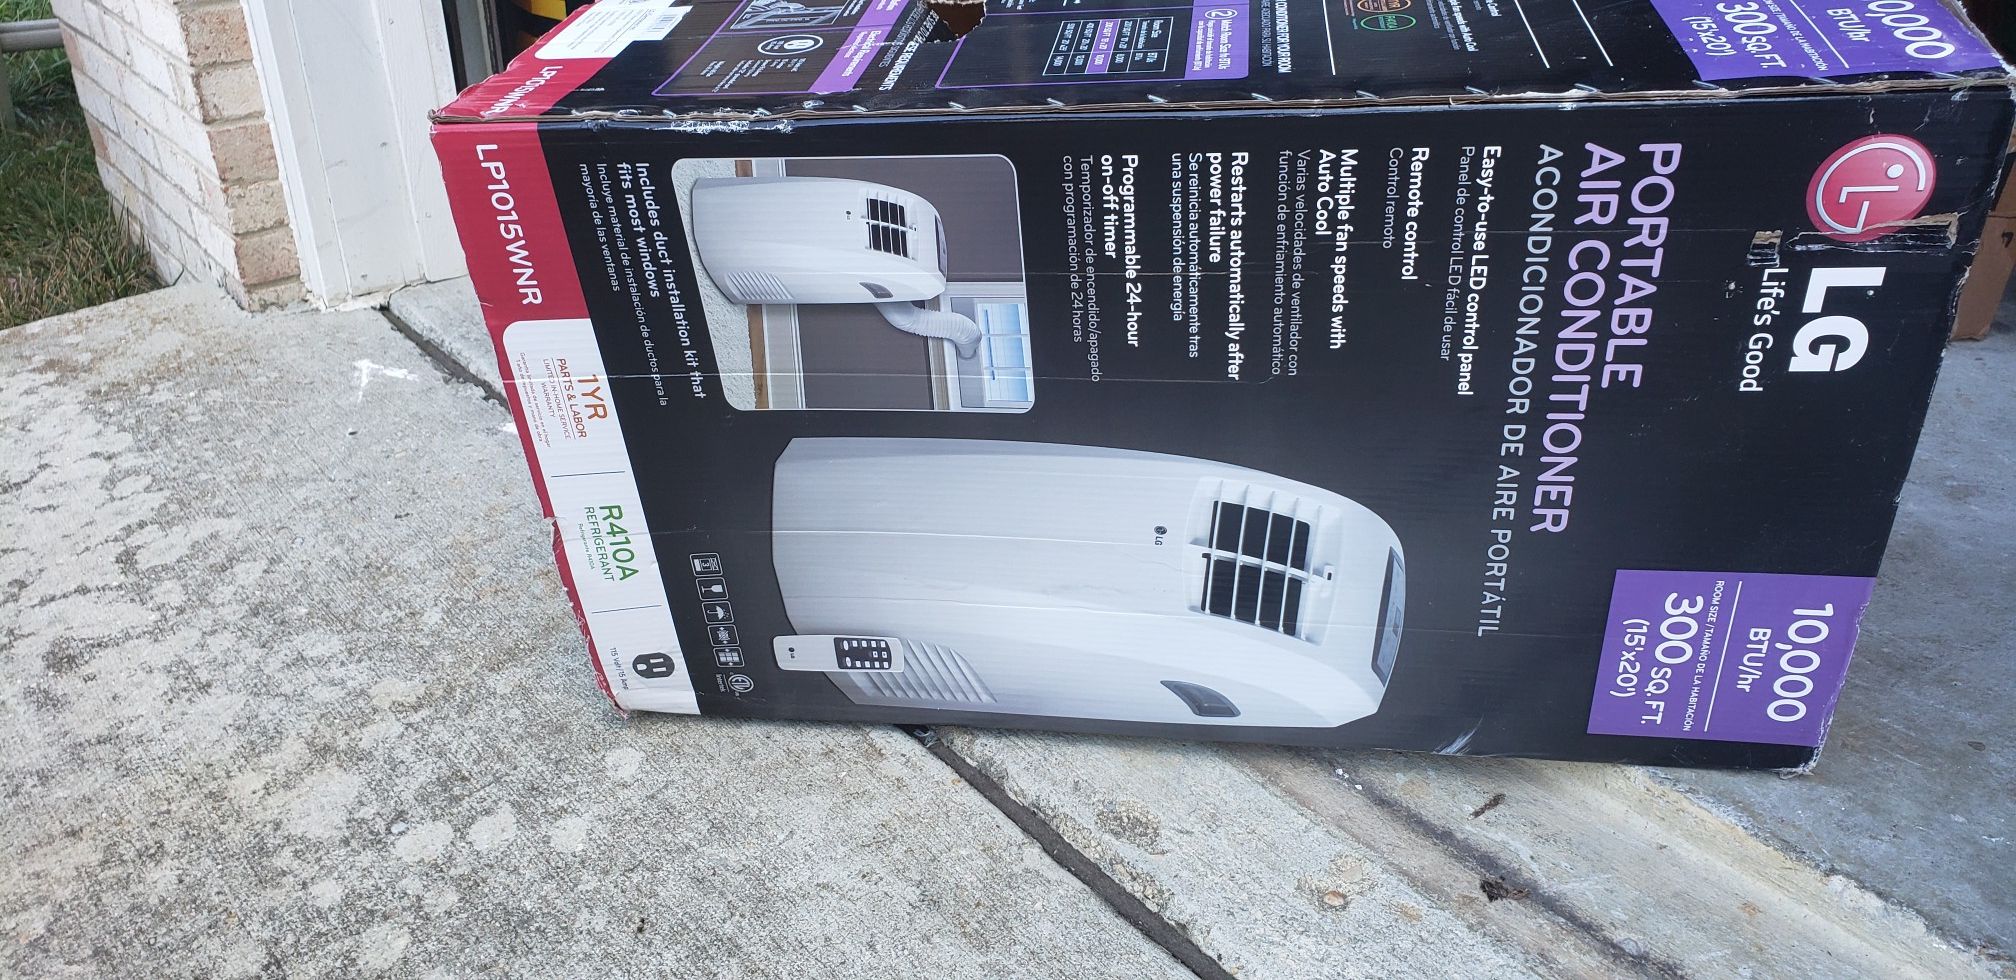 LG portable air conditioner brand new open box worth 50 percent less original cost 10,000 BTU